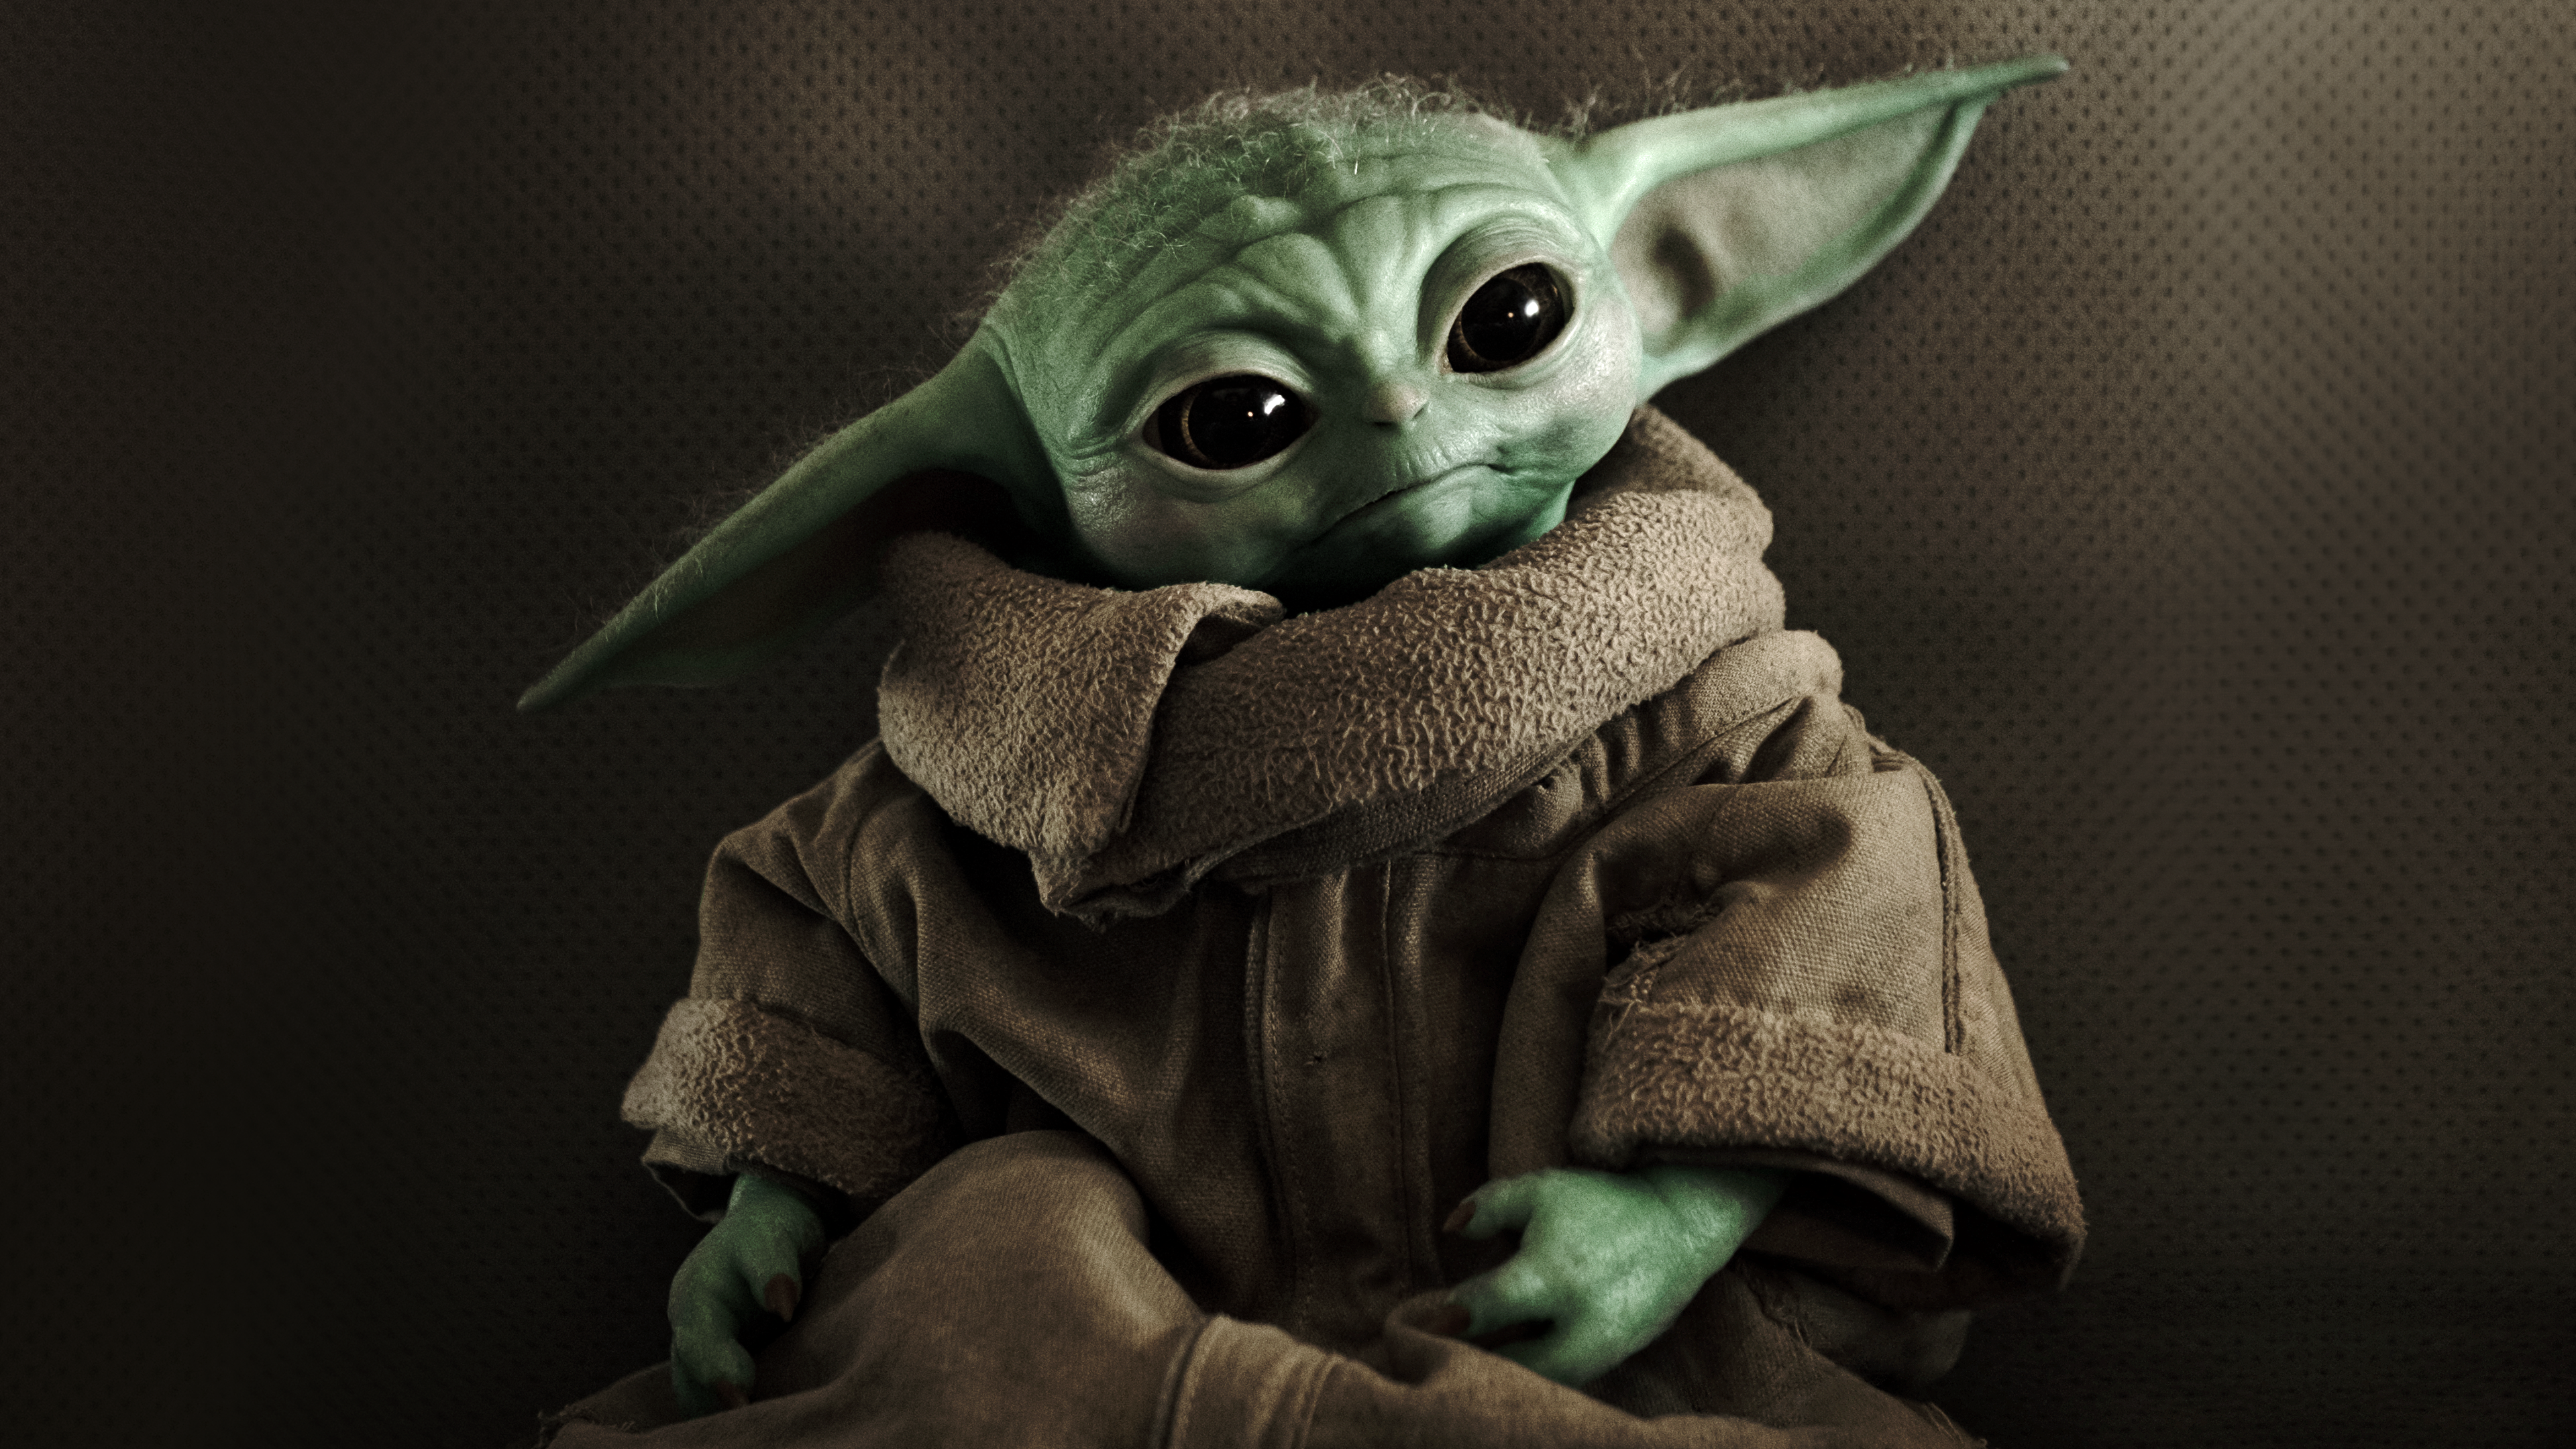  Baby Yoda Hintergrundbild 3840x2160. Baby Yoda HD Wallpaper and Background